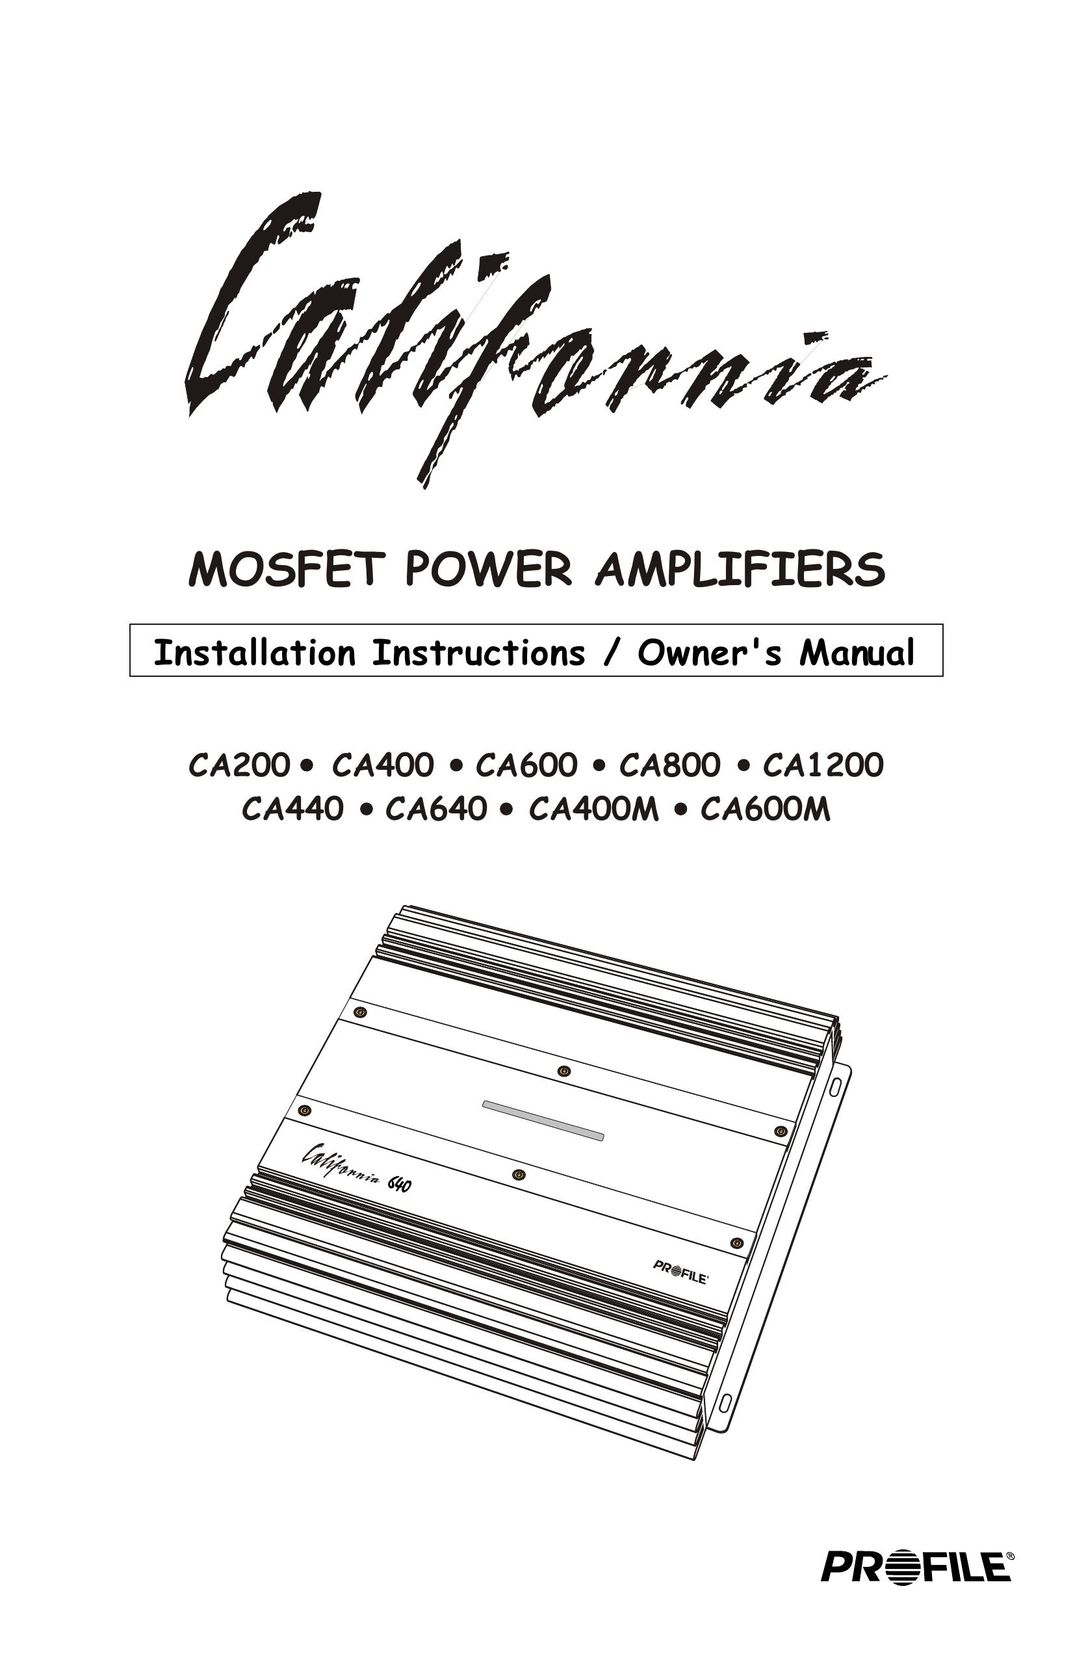 Profile CA400M Stereo Amplifier User Manual